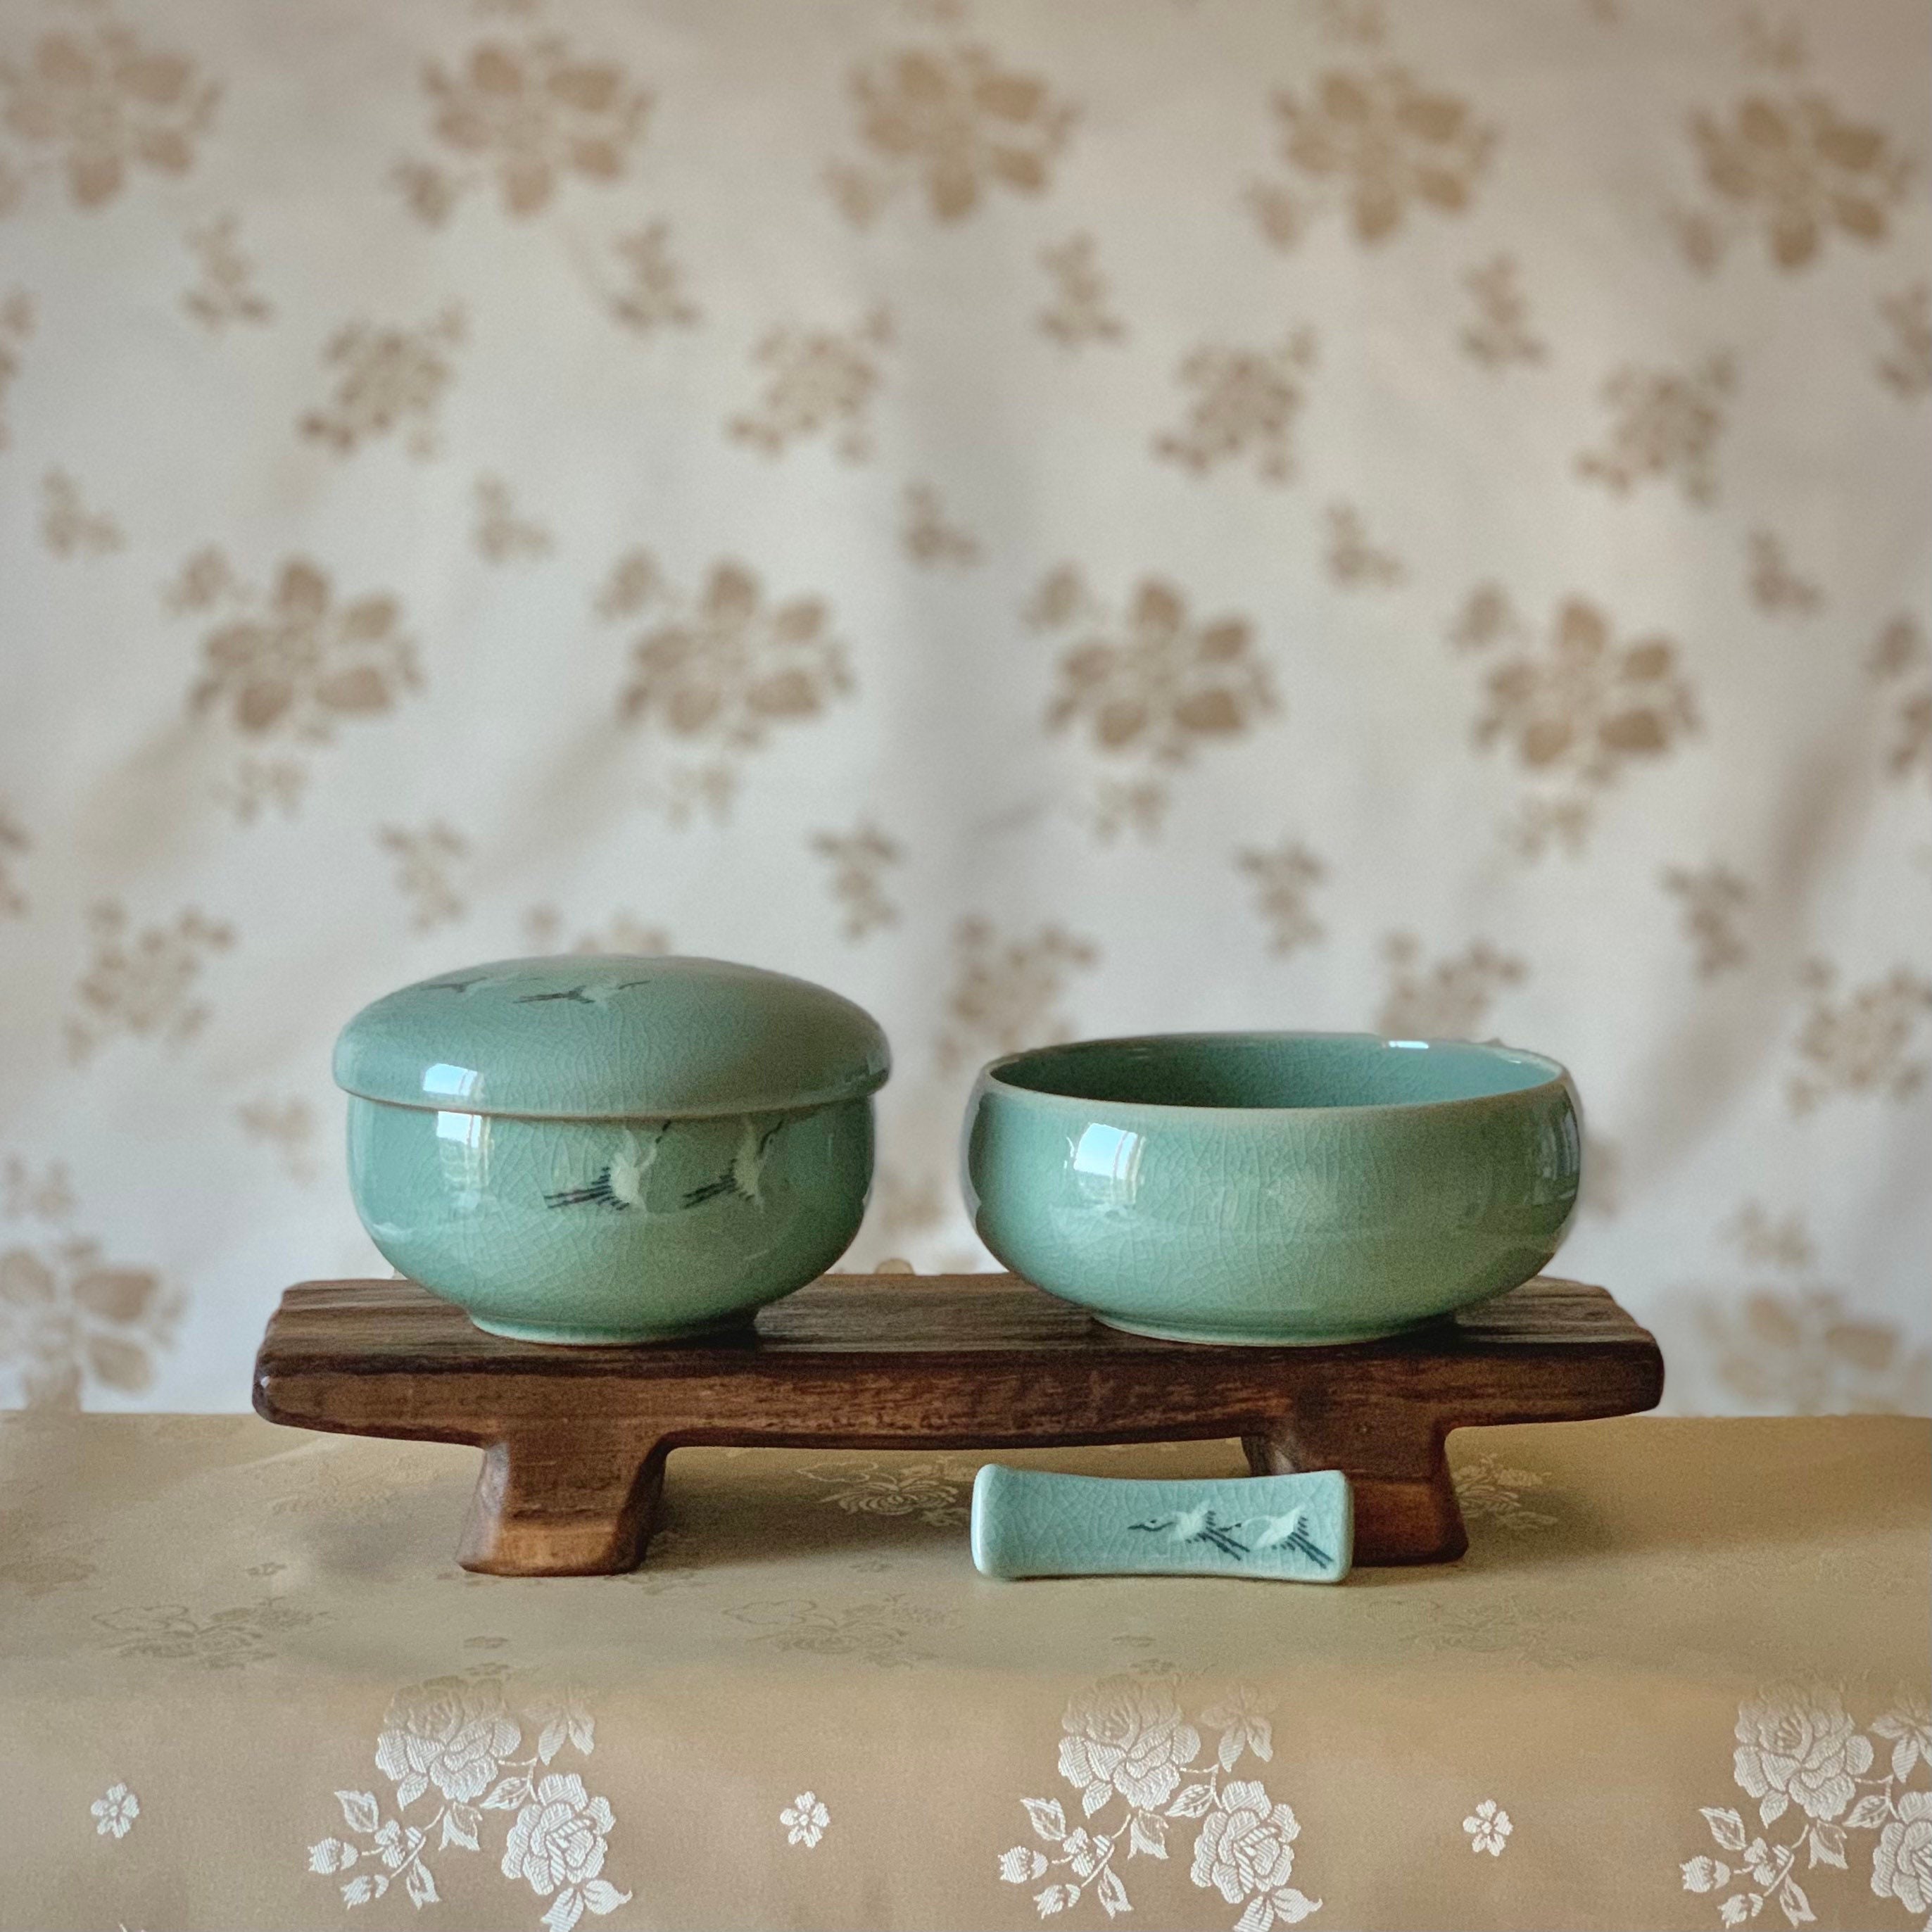 Premium Stone Bowl Collection – Crazy Korean Cooking